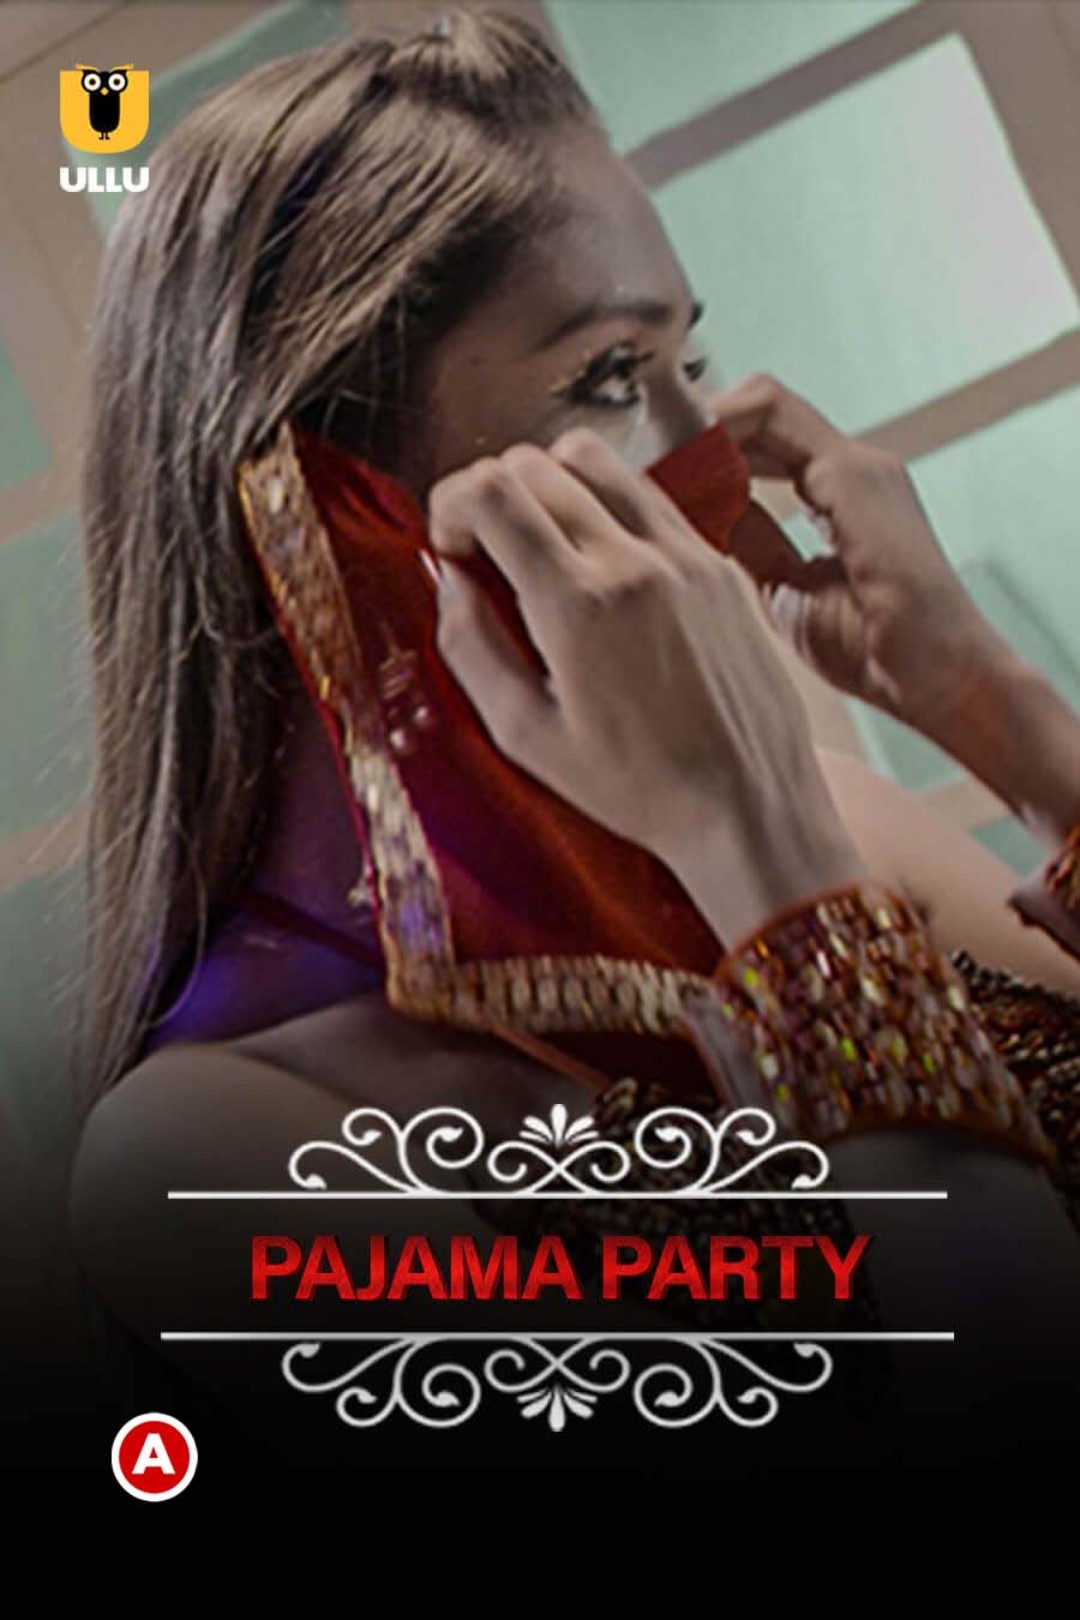 18+ Pajama Party (Charmsukh) 2019 Ullu Hindi Web Series 720p HDRip Download